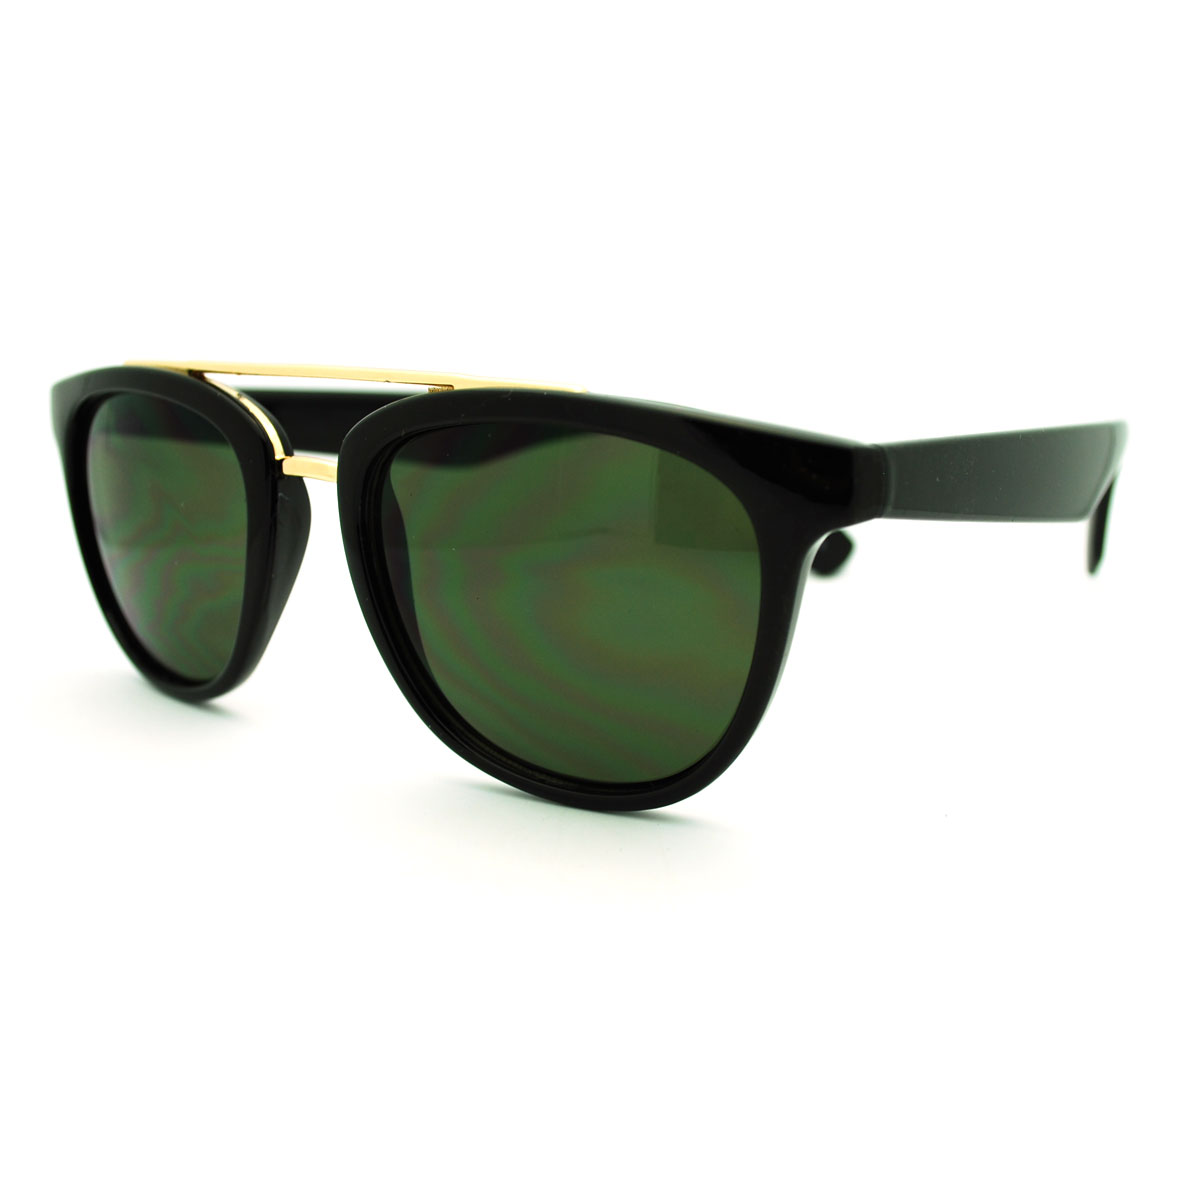 Trendy Gangnam Style Sunglasses with Metal Double Nose Bridge | eBay